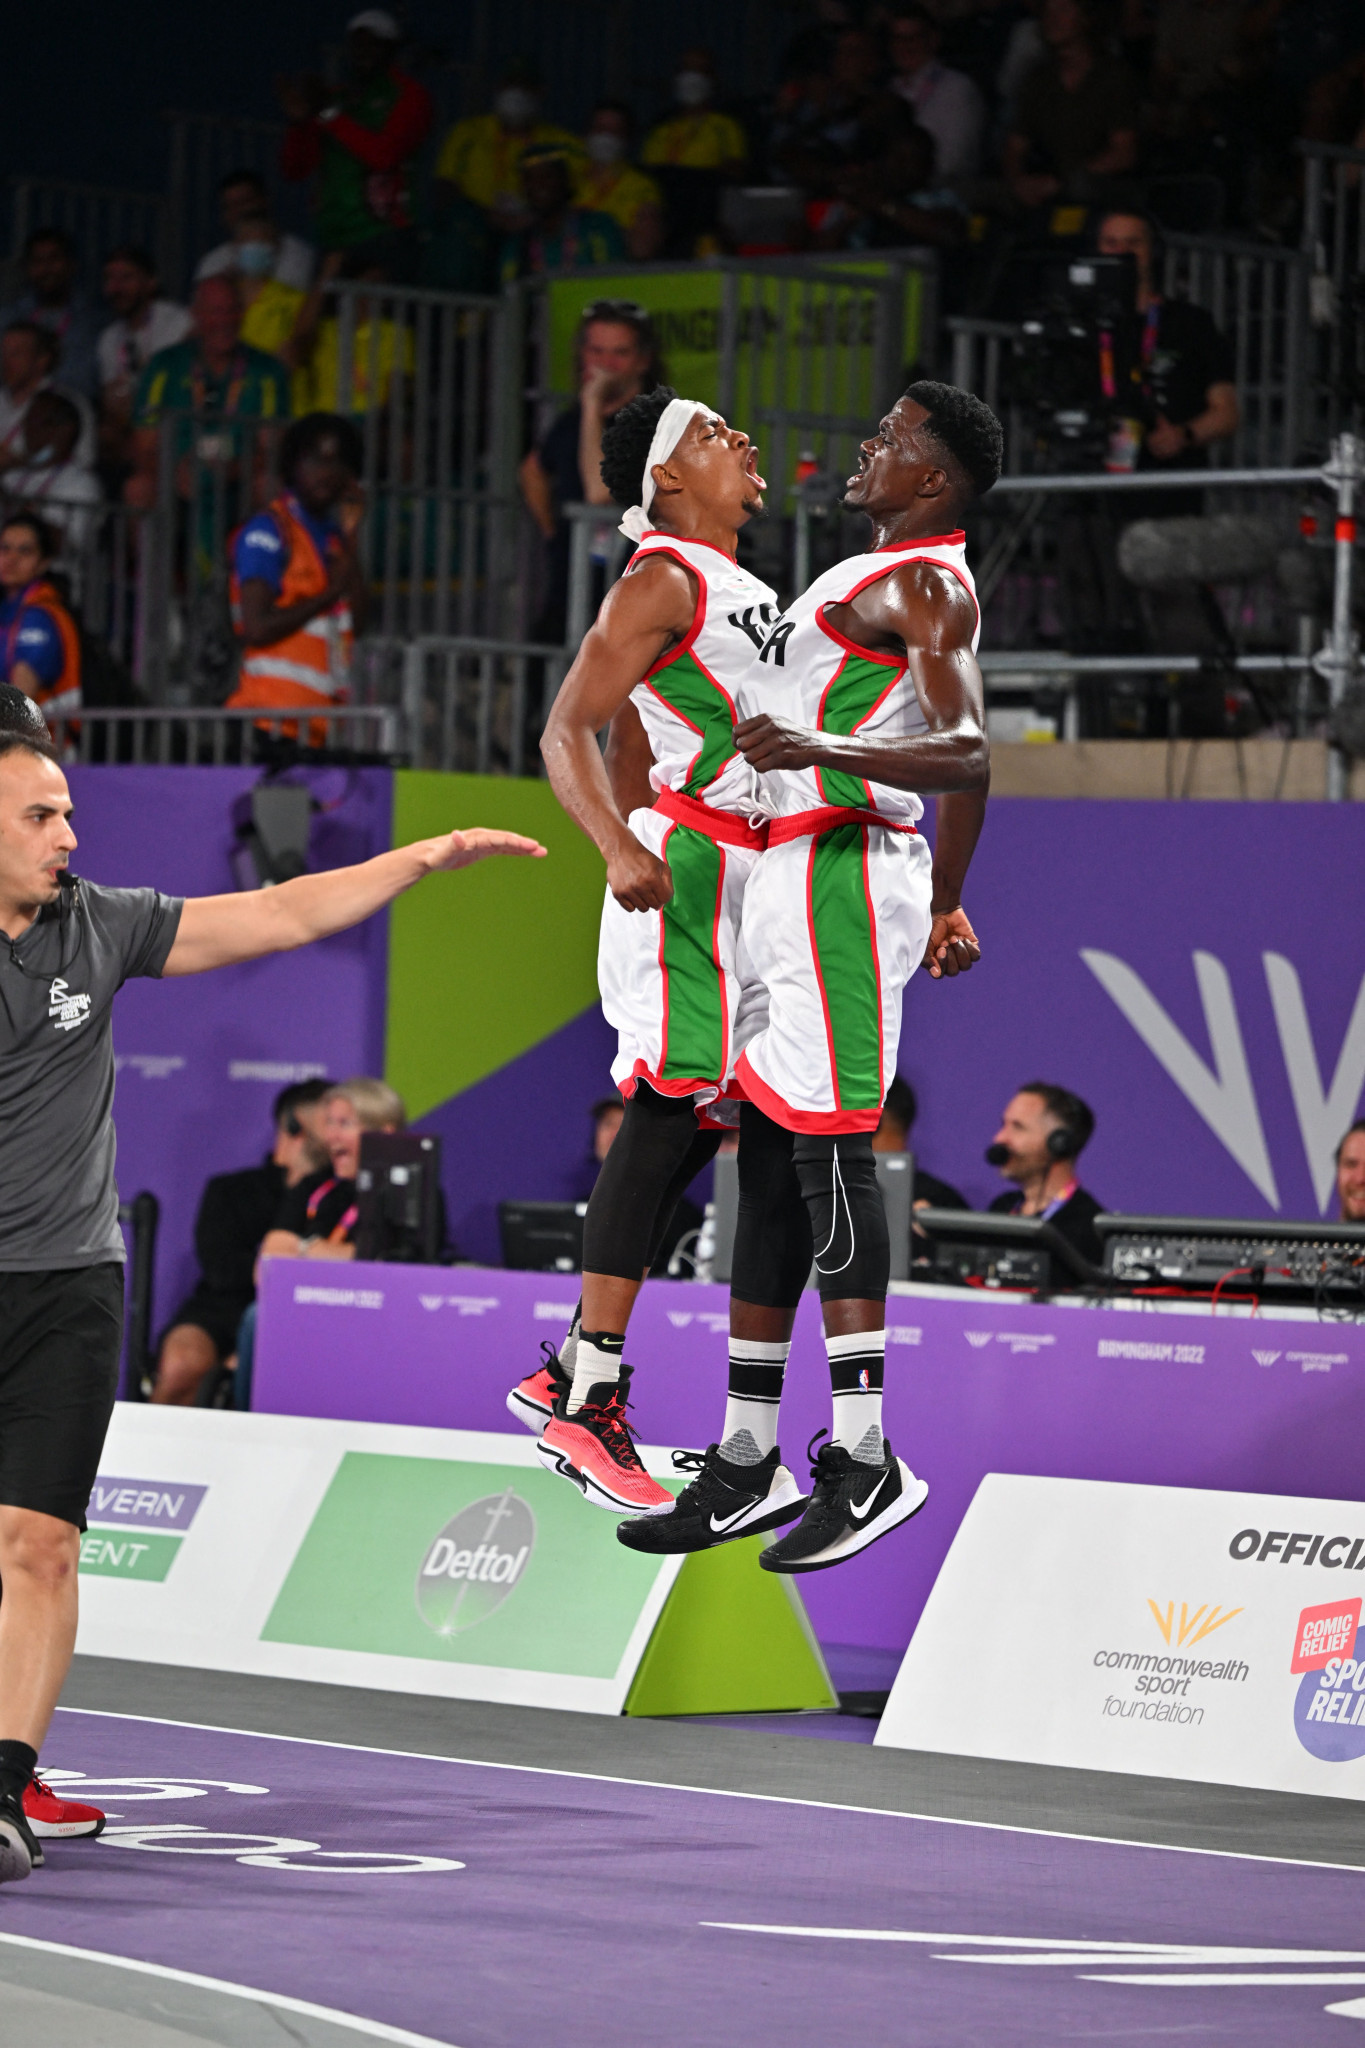 Kenya celebrating a 3x3 basketball victory ©Getty Images